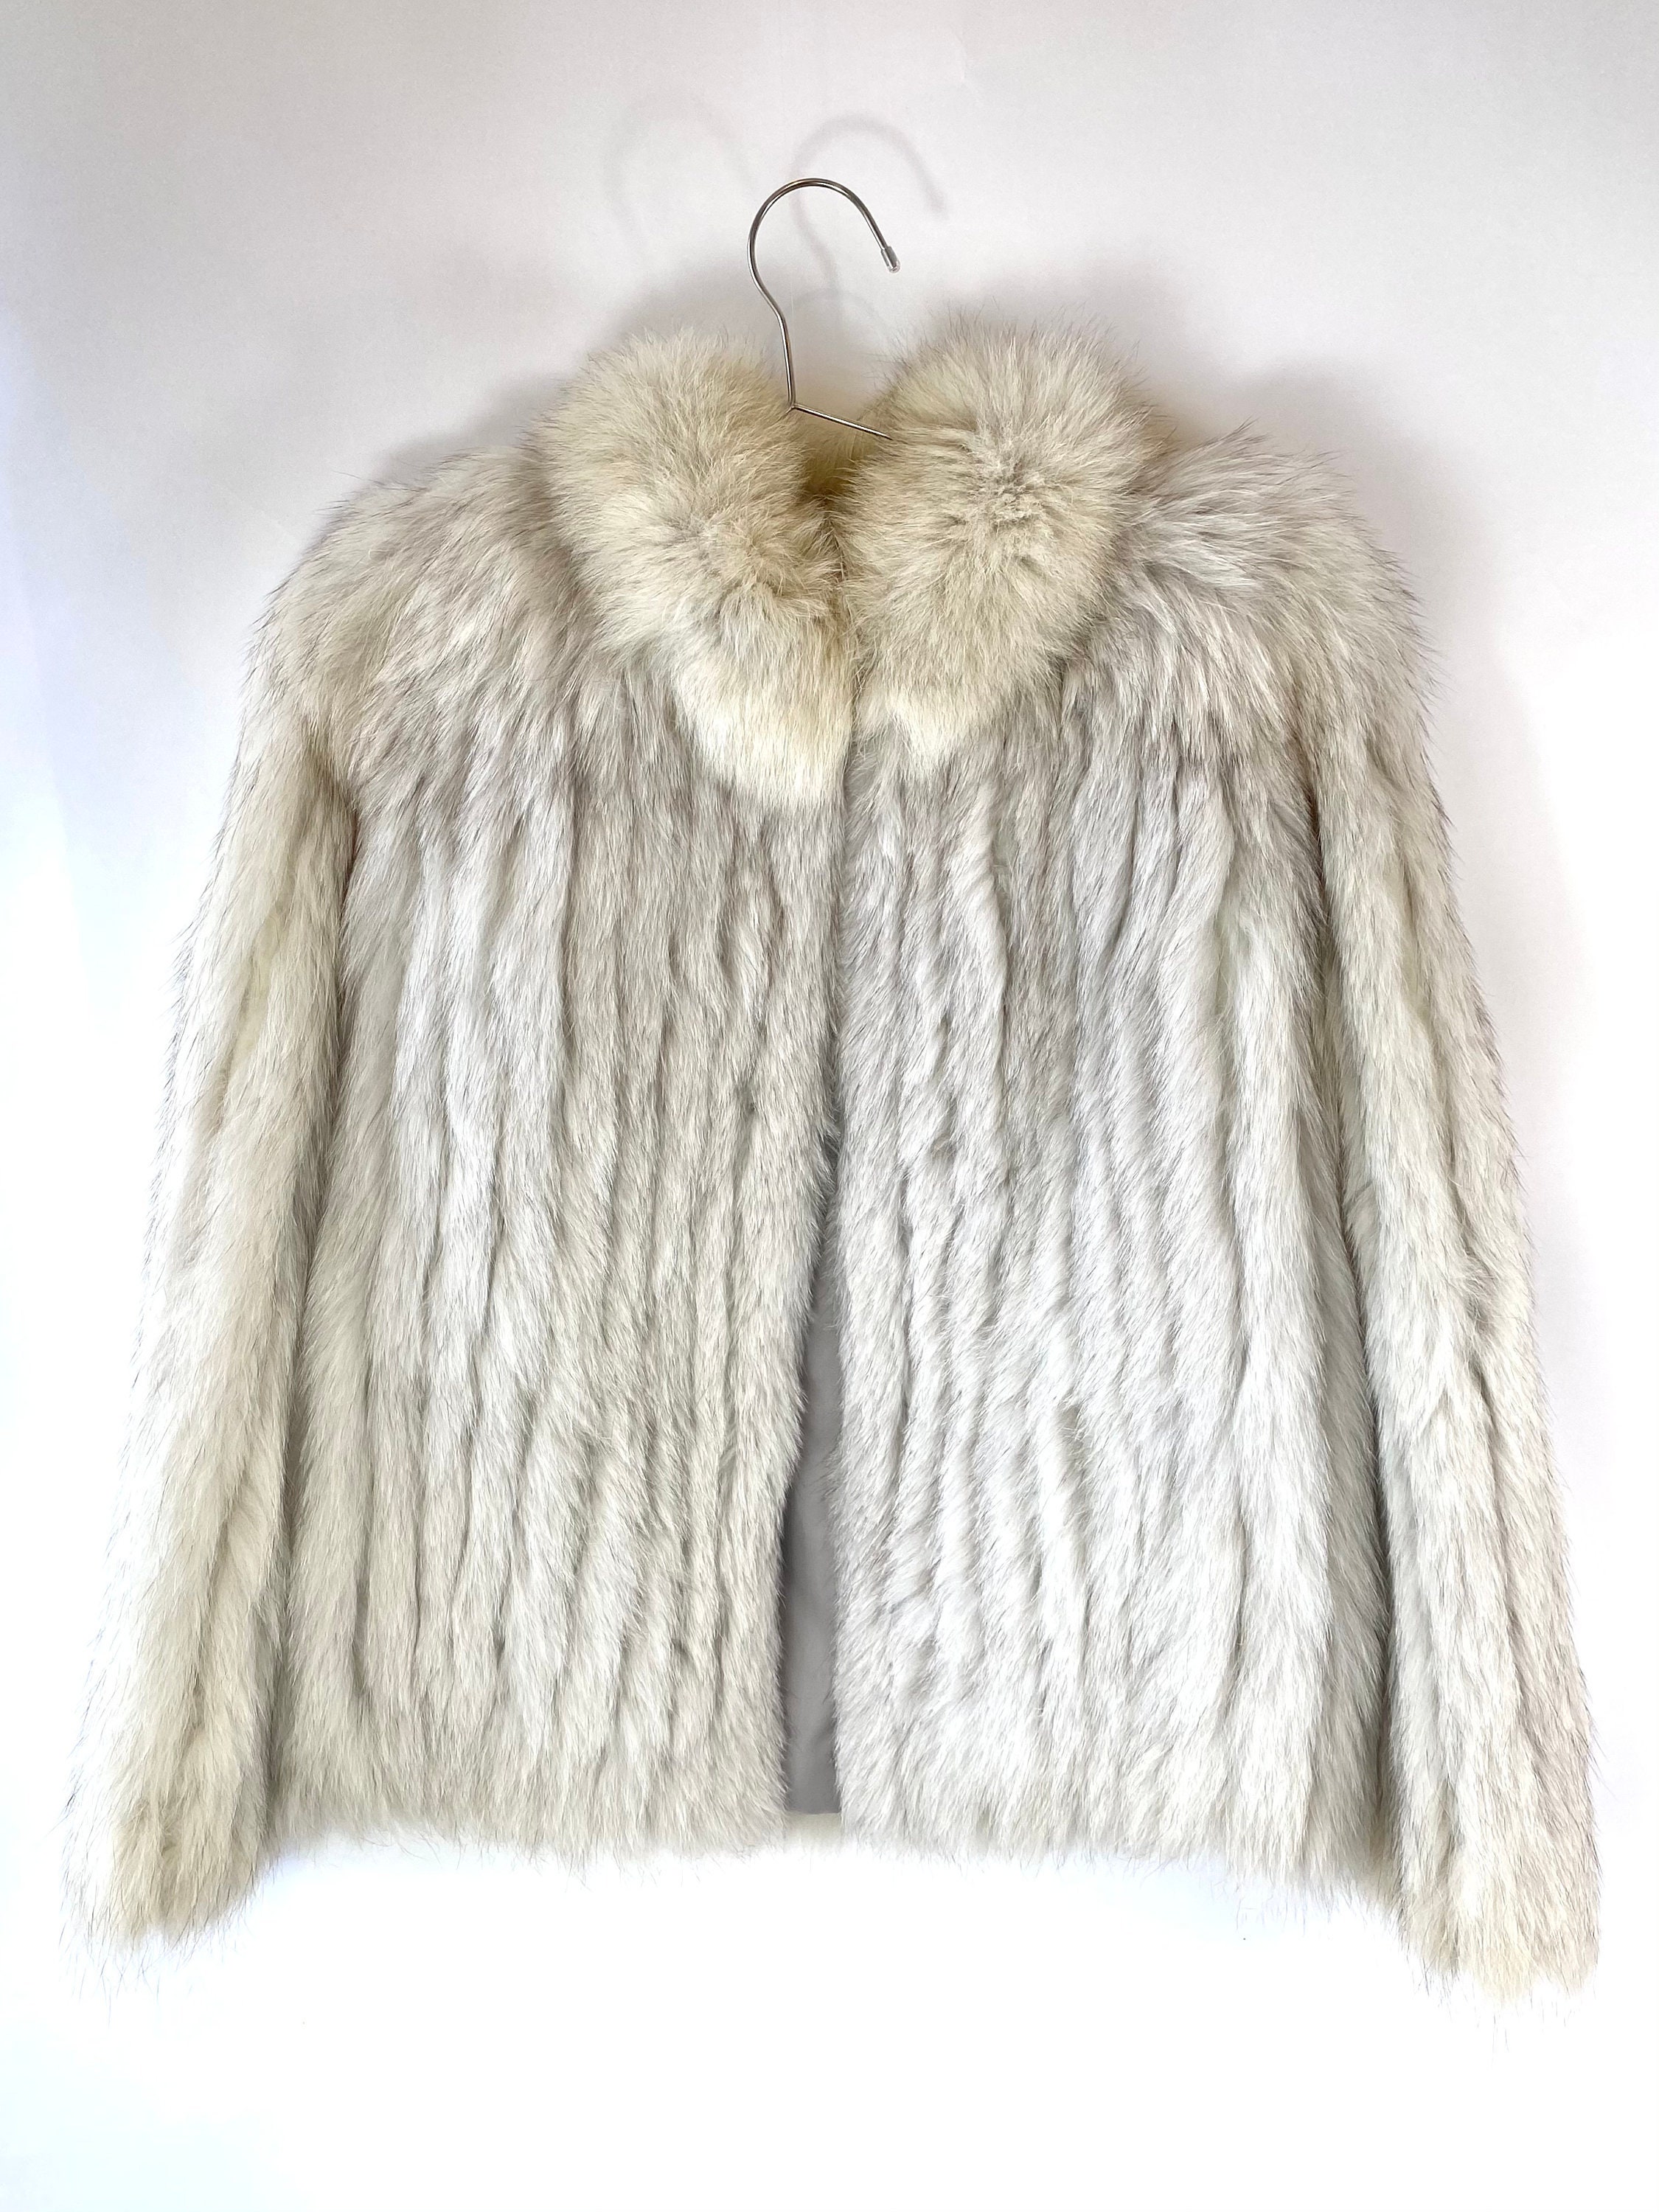 Early 2000s Fur Coat by Saga Fox Vintage Fox Fur - Etsy